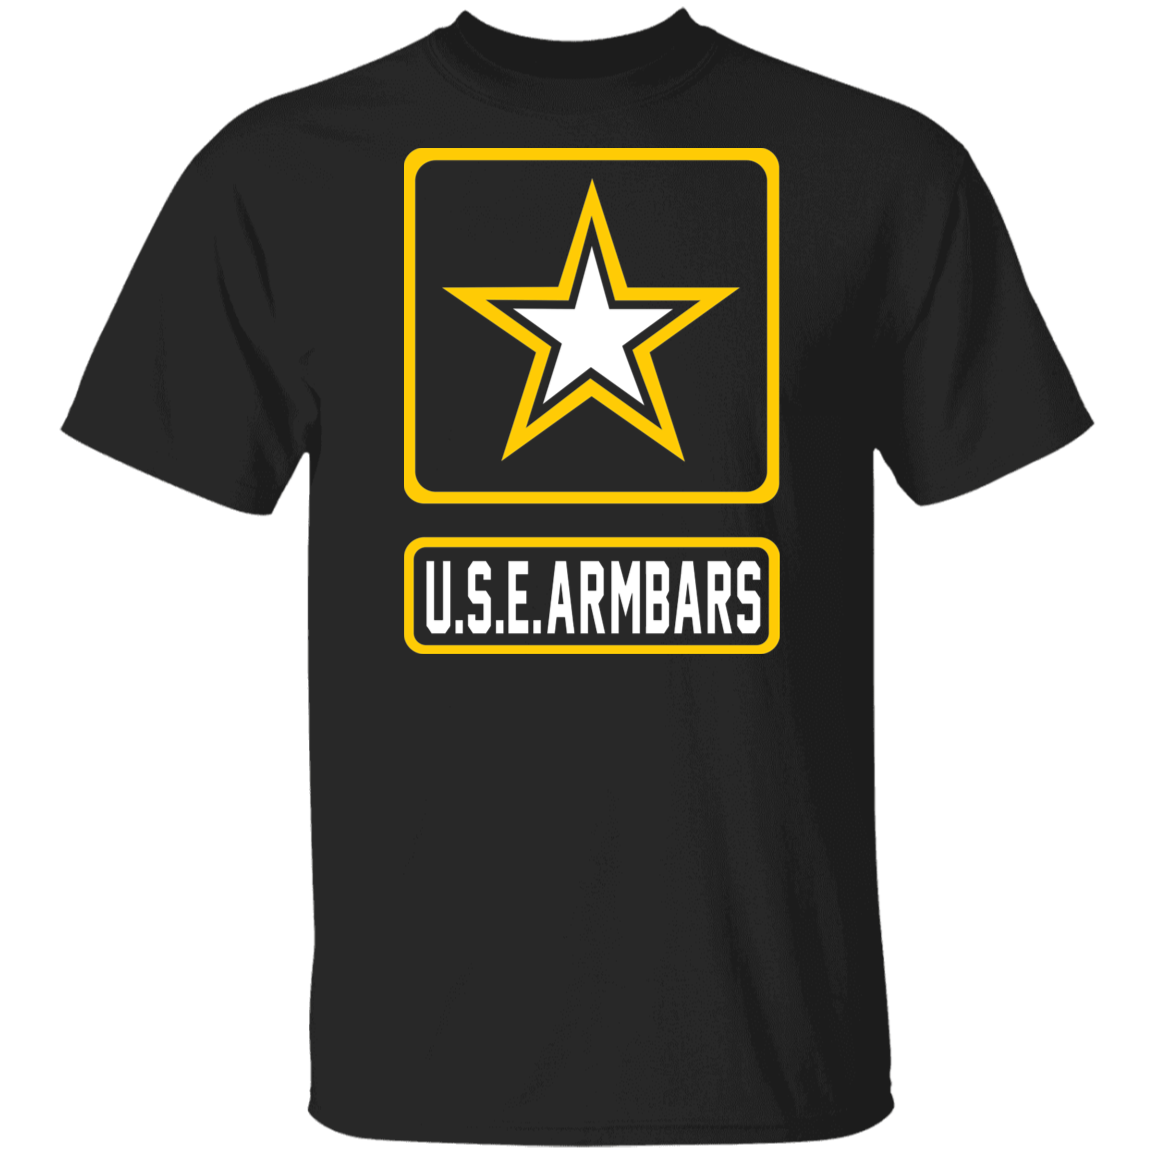 Artichoke Fight Gear Custom Design #8. USE ARMBARS. US Army Parody. Men's 100% Cotton T-Shirt